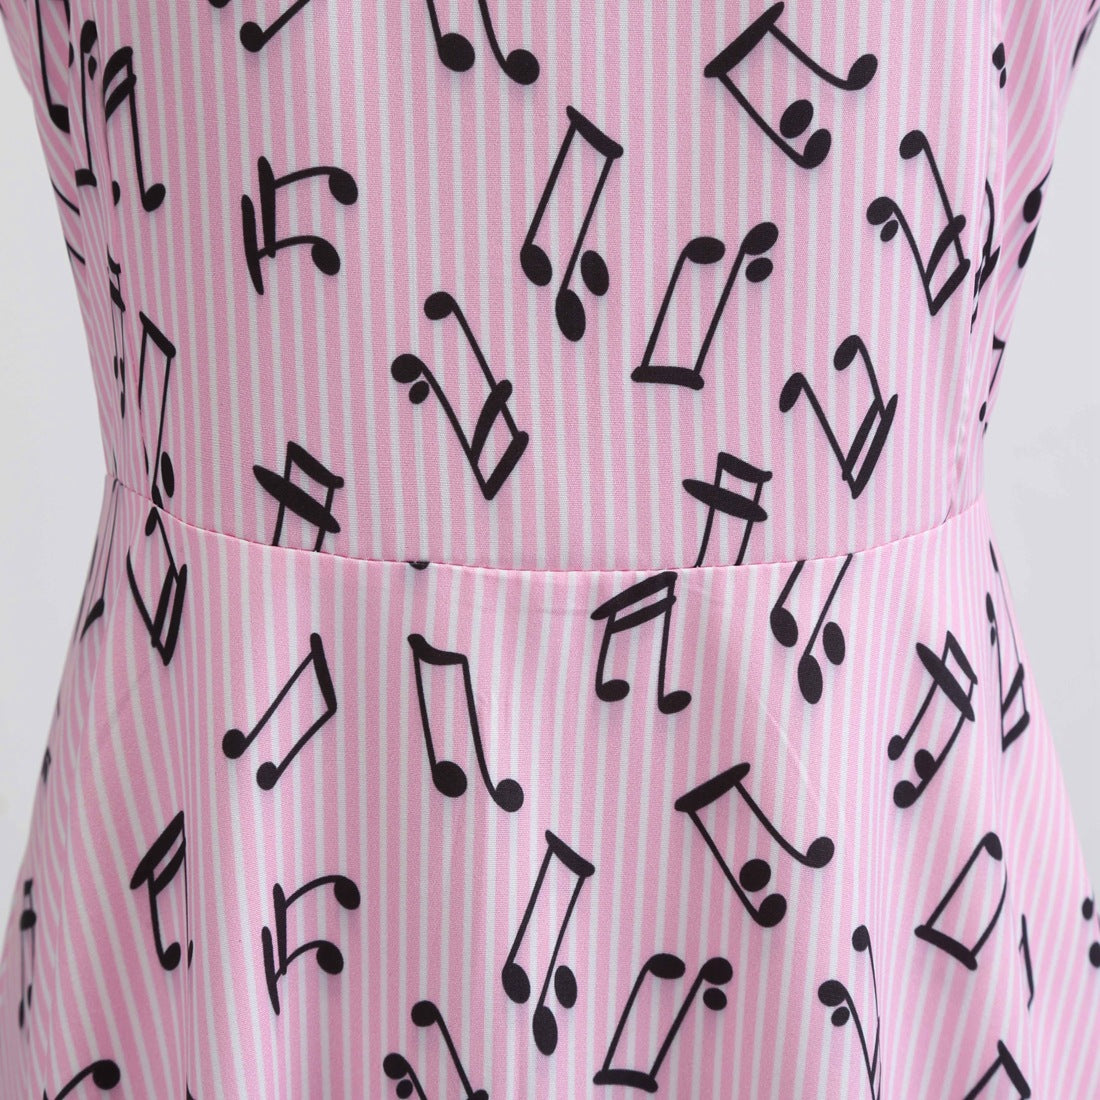 Vintage Music Note Dresses for Women